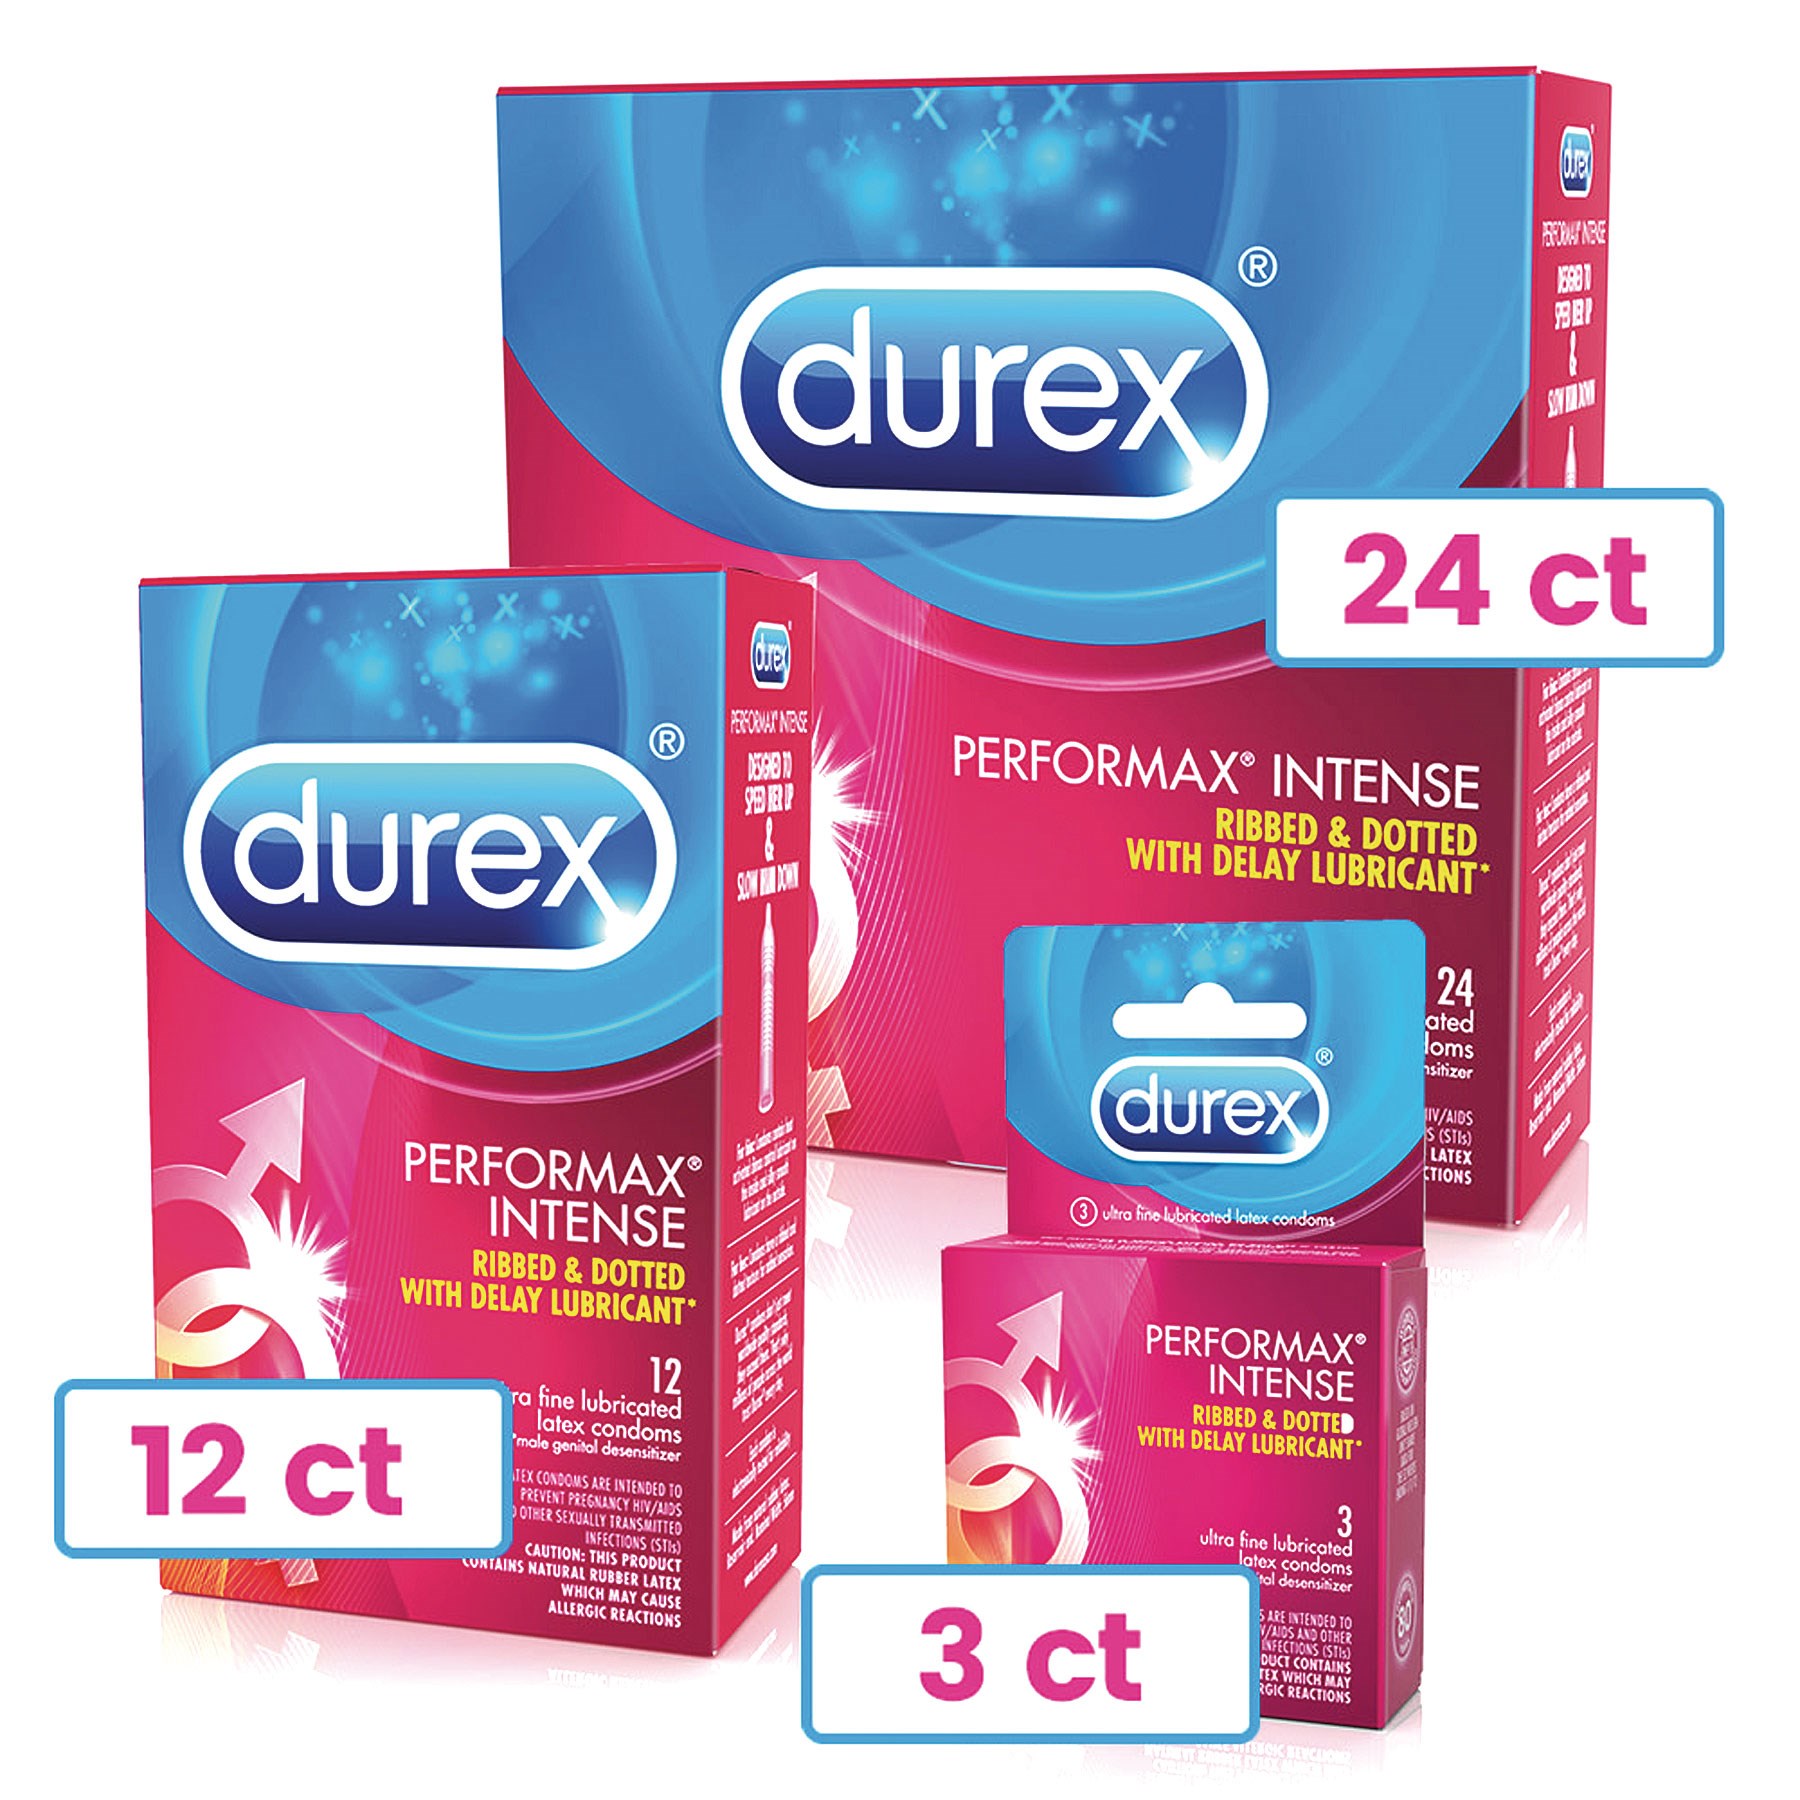 Durex Performax Intense Condom sizes